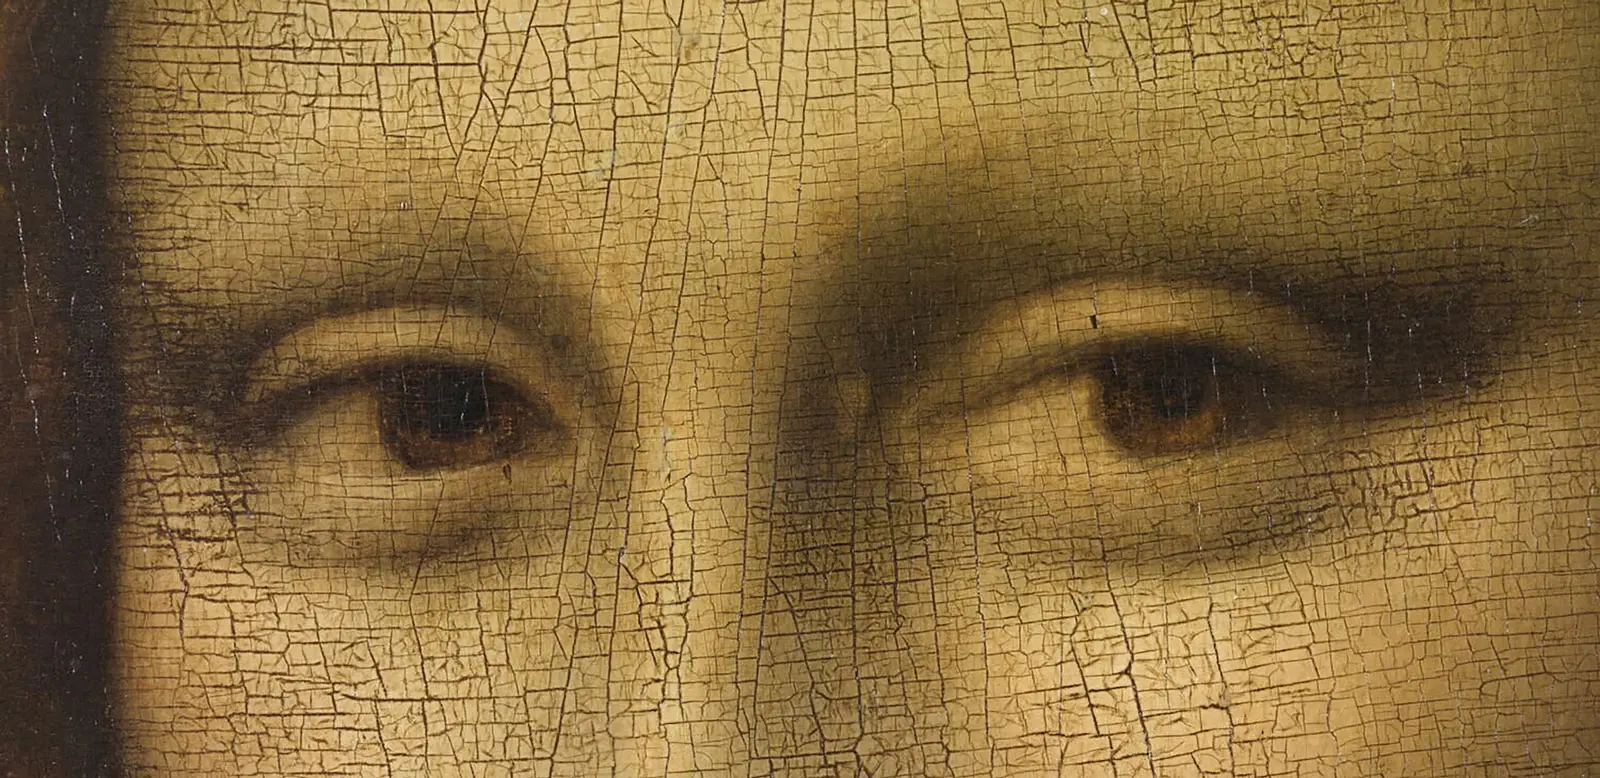 Sfumato Leonardo Mona Lisa eyes looking at us